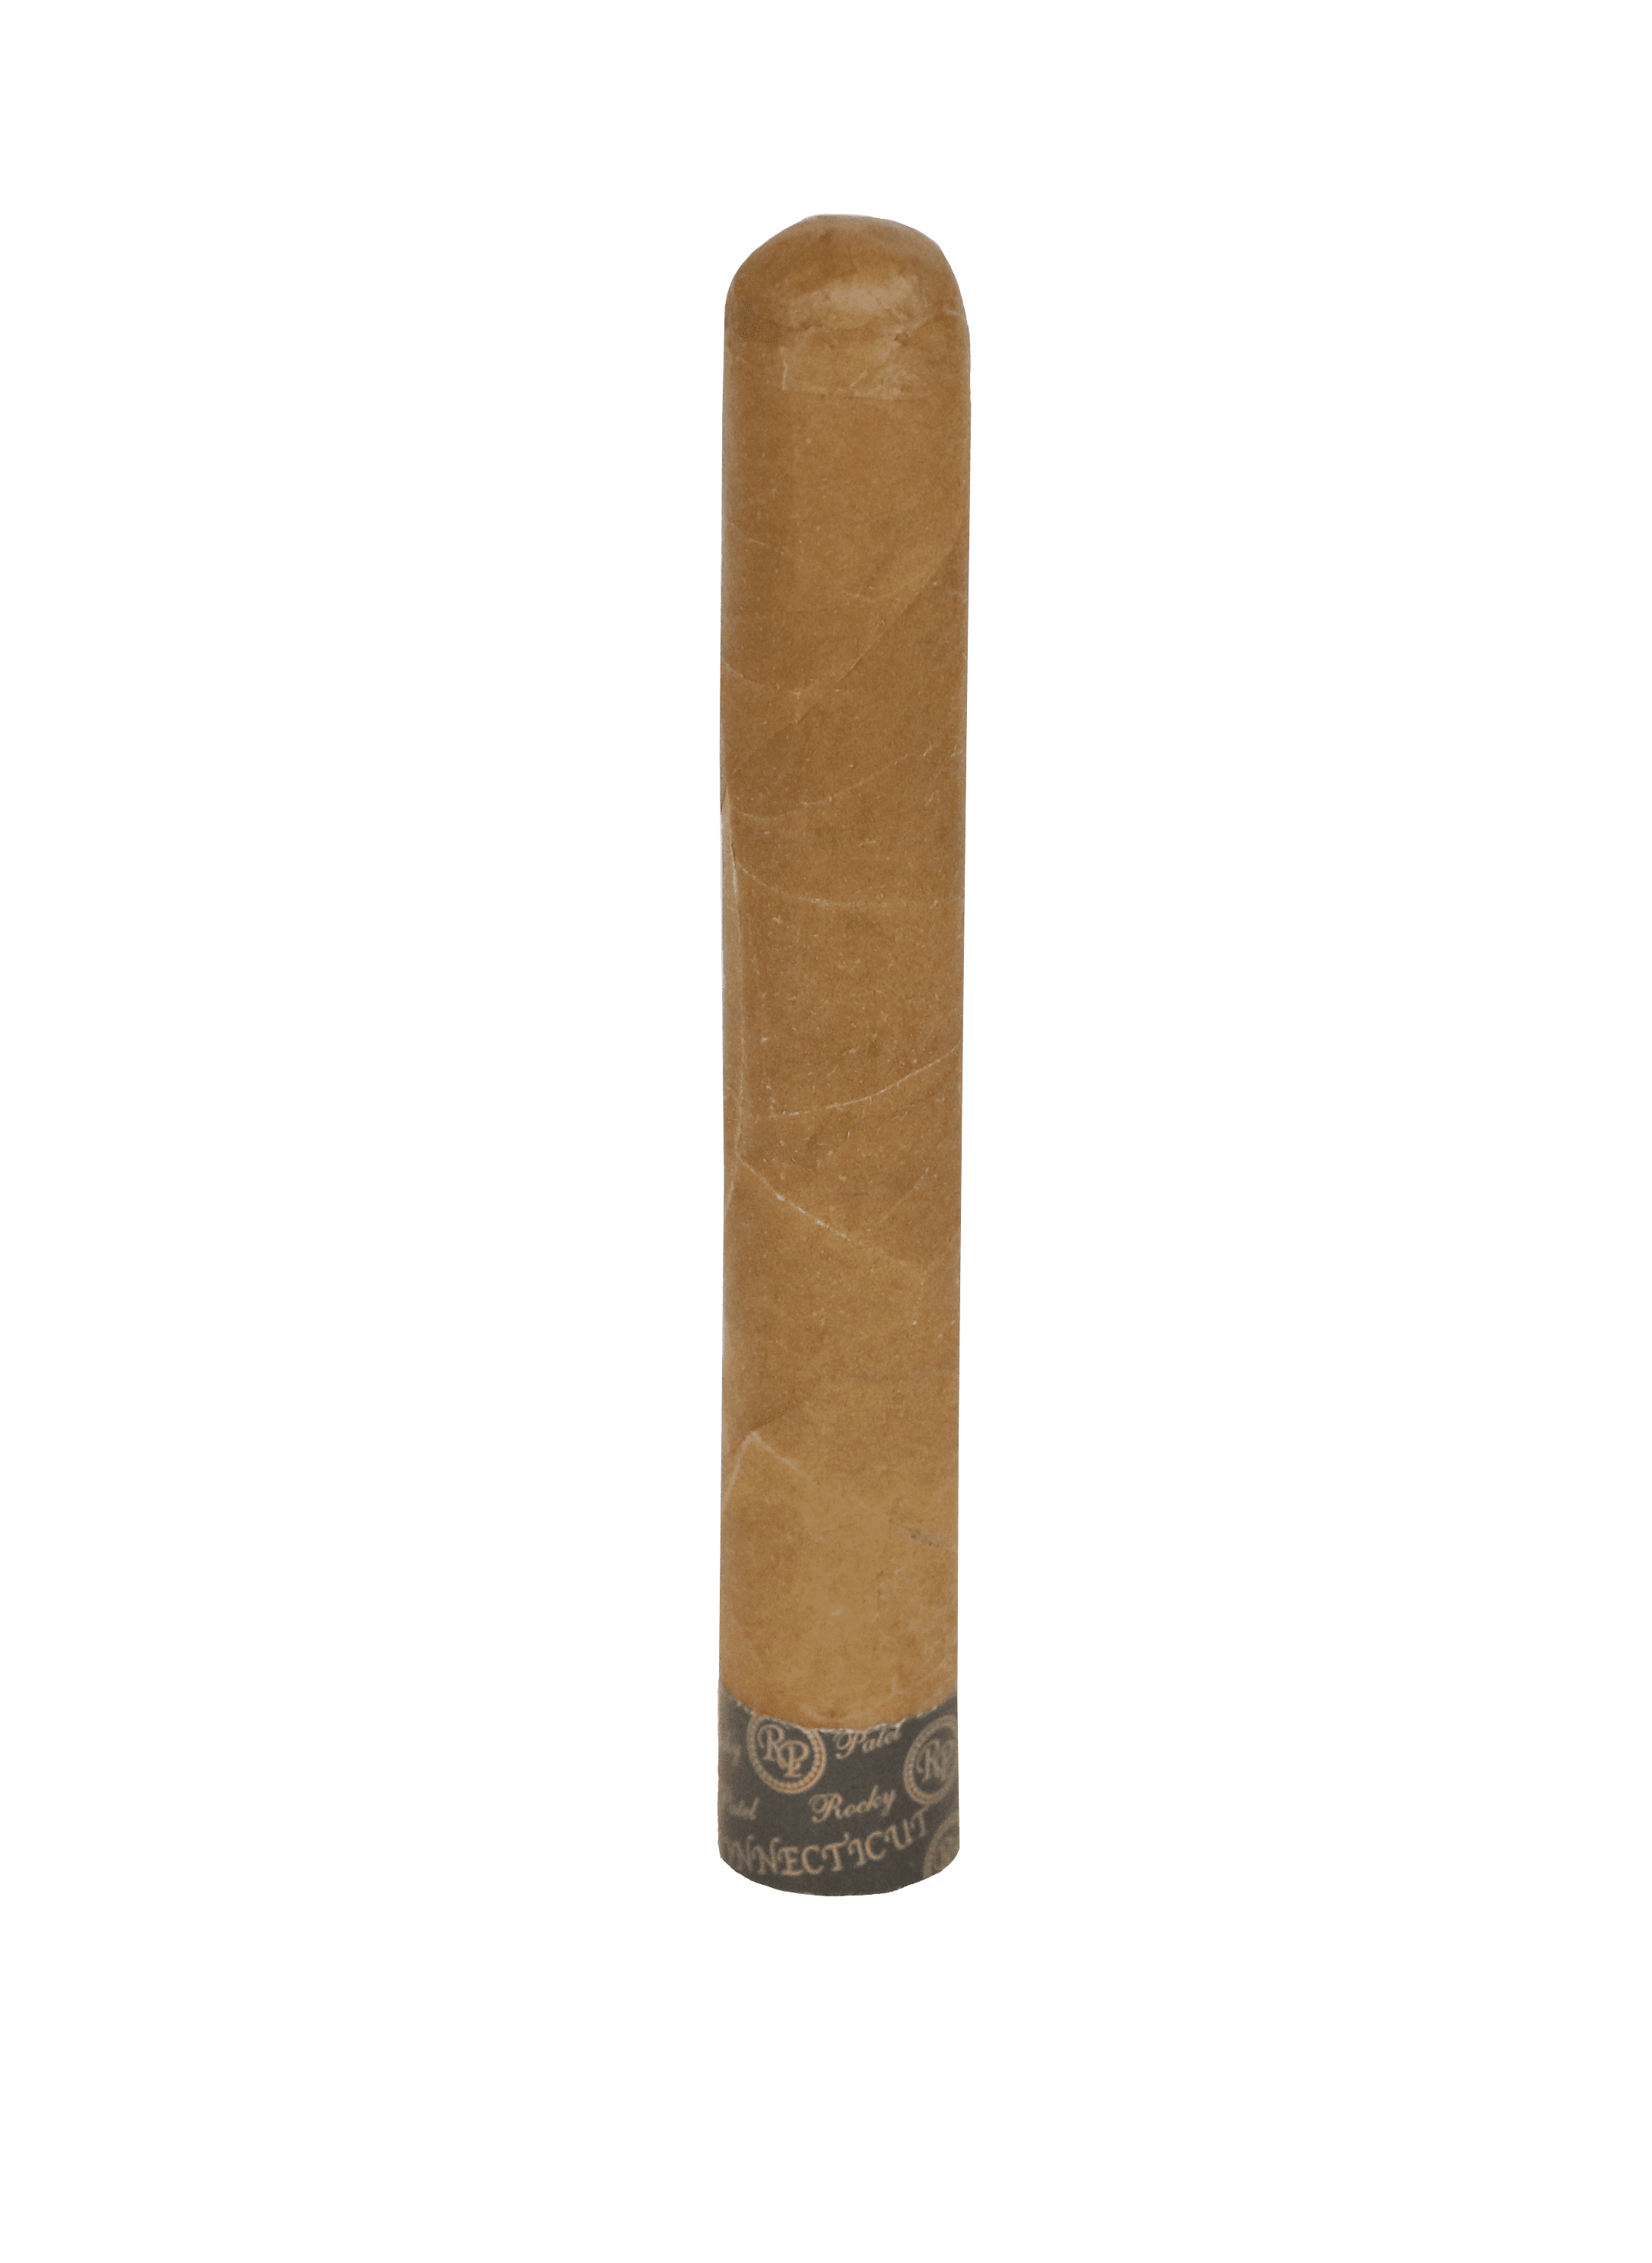 Single Rocky Patel The Edge Connecticut Robusto cigar